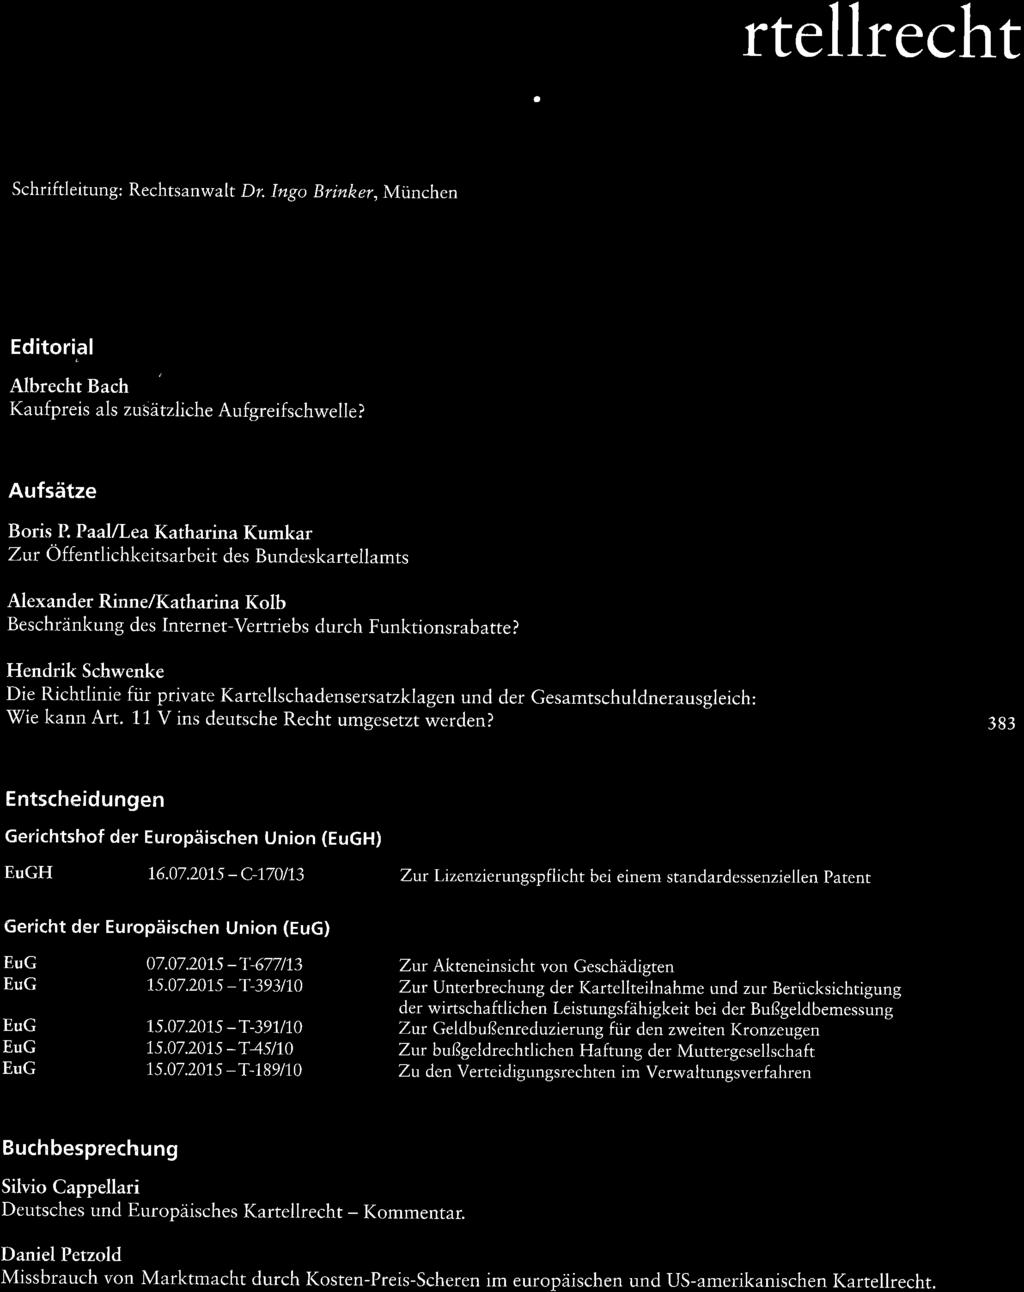 Neue Zeitschrift a a rtellrecht NZKafi Schriftleitung: Rechtsanwalt Dr. Ingo Brinker,München 9 2015 Editorial Albrecht Bach I(aufpreis als zusätzliche Aufgreifschwelle? 365 Aufsätze Boris P.